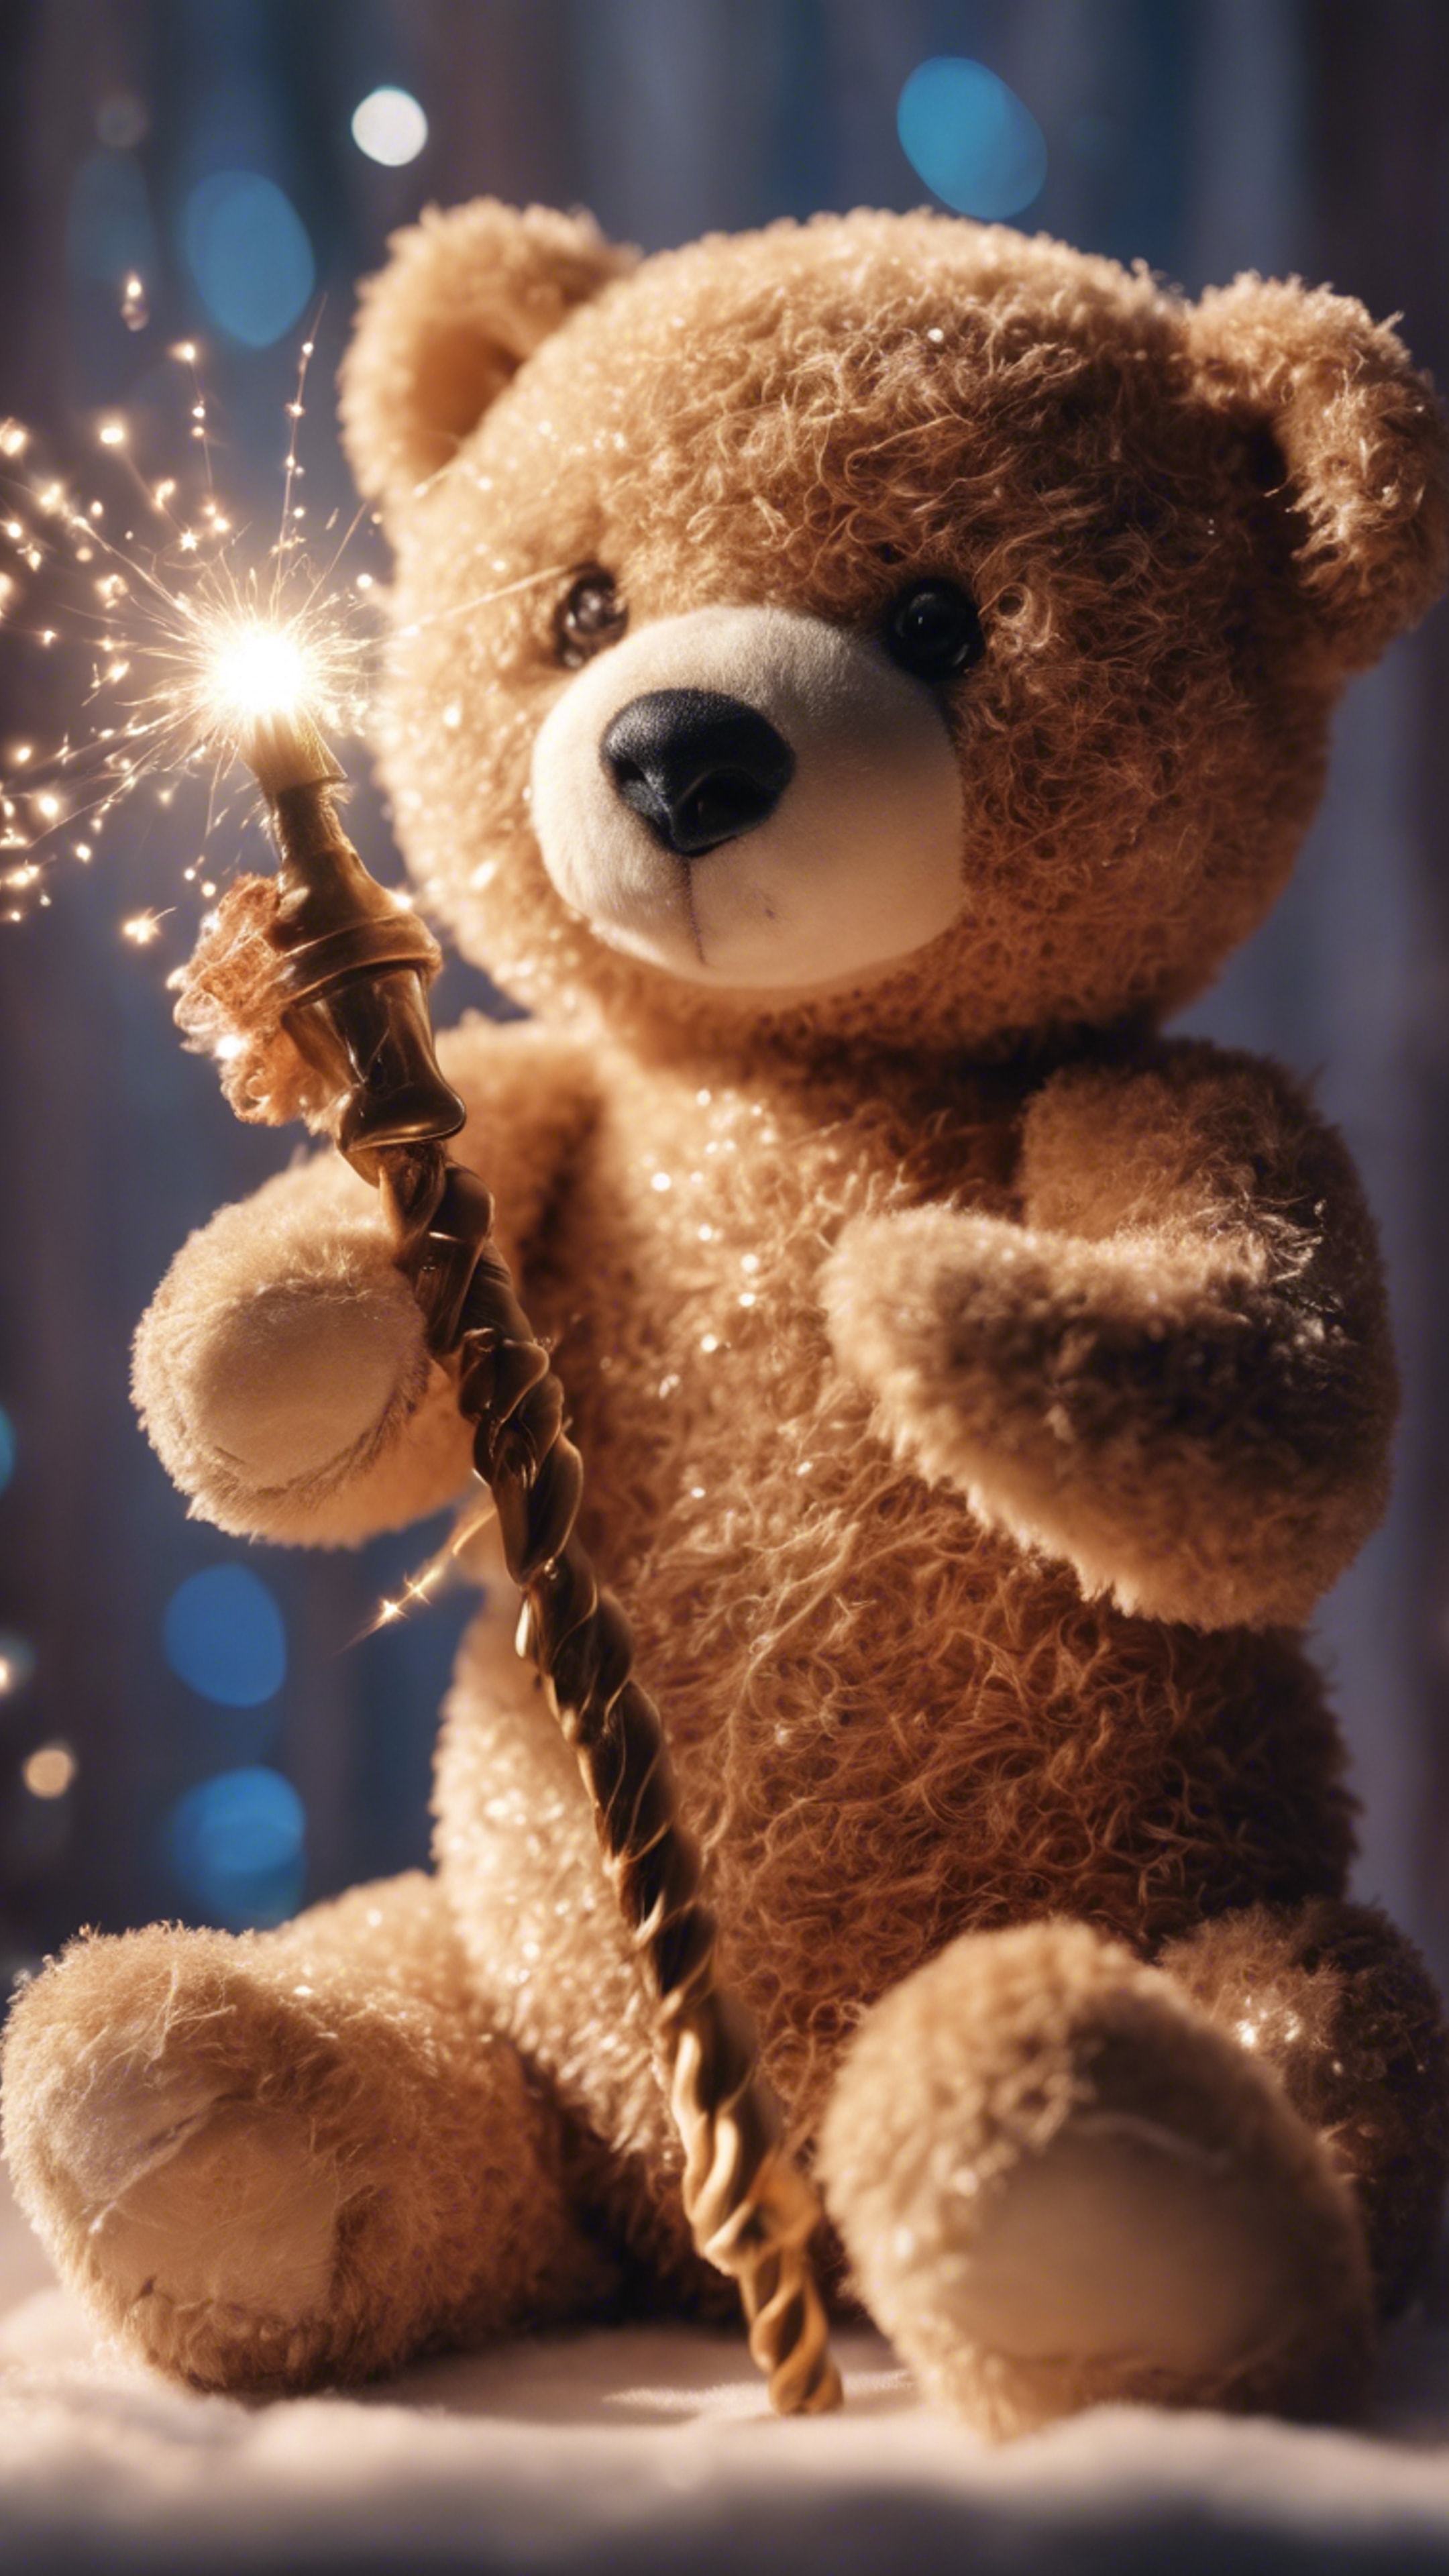 A teddy bear holding a sparkling magic wand.壁紙[17b0ed03ff7940b79ba3]